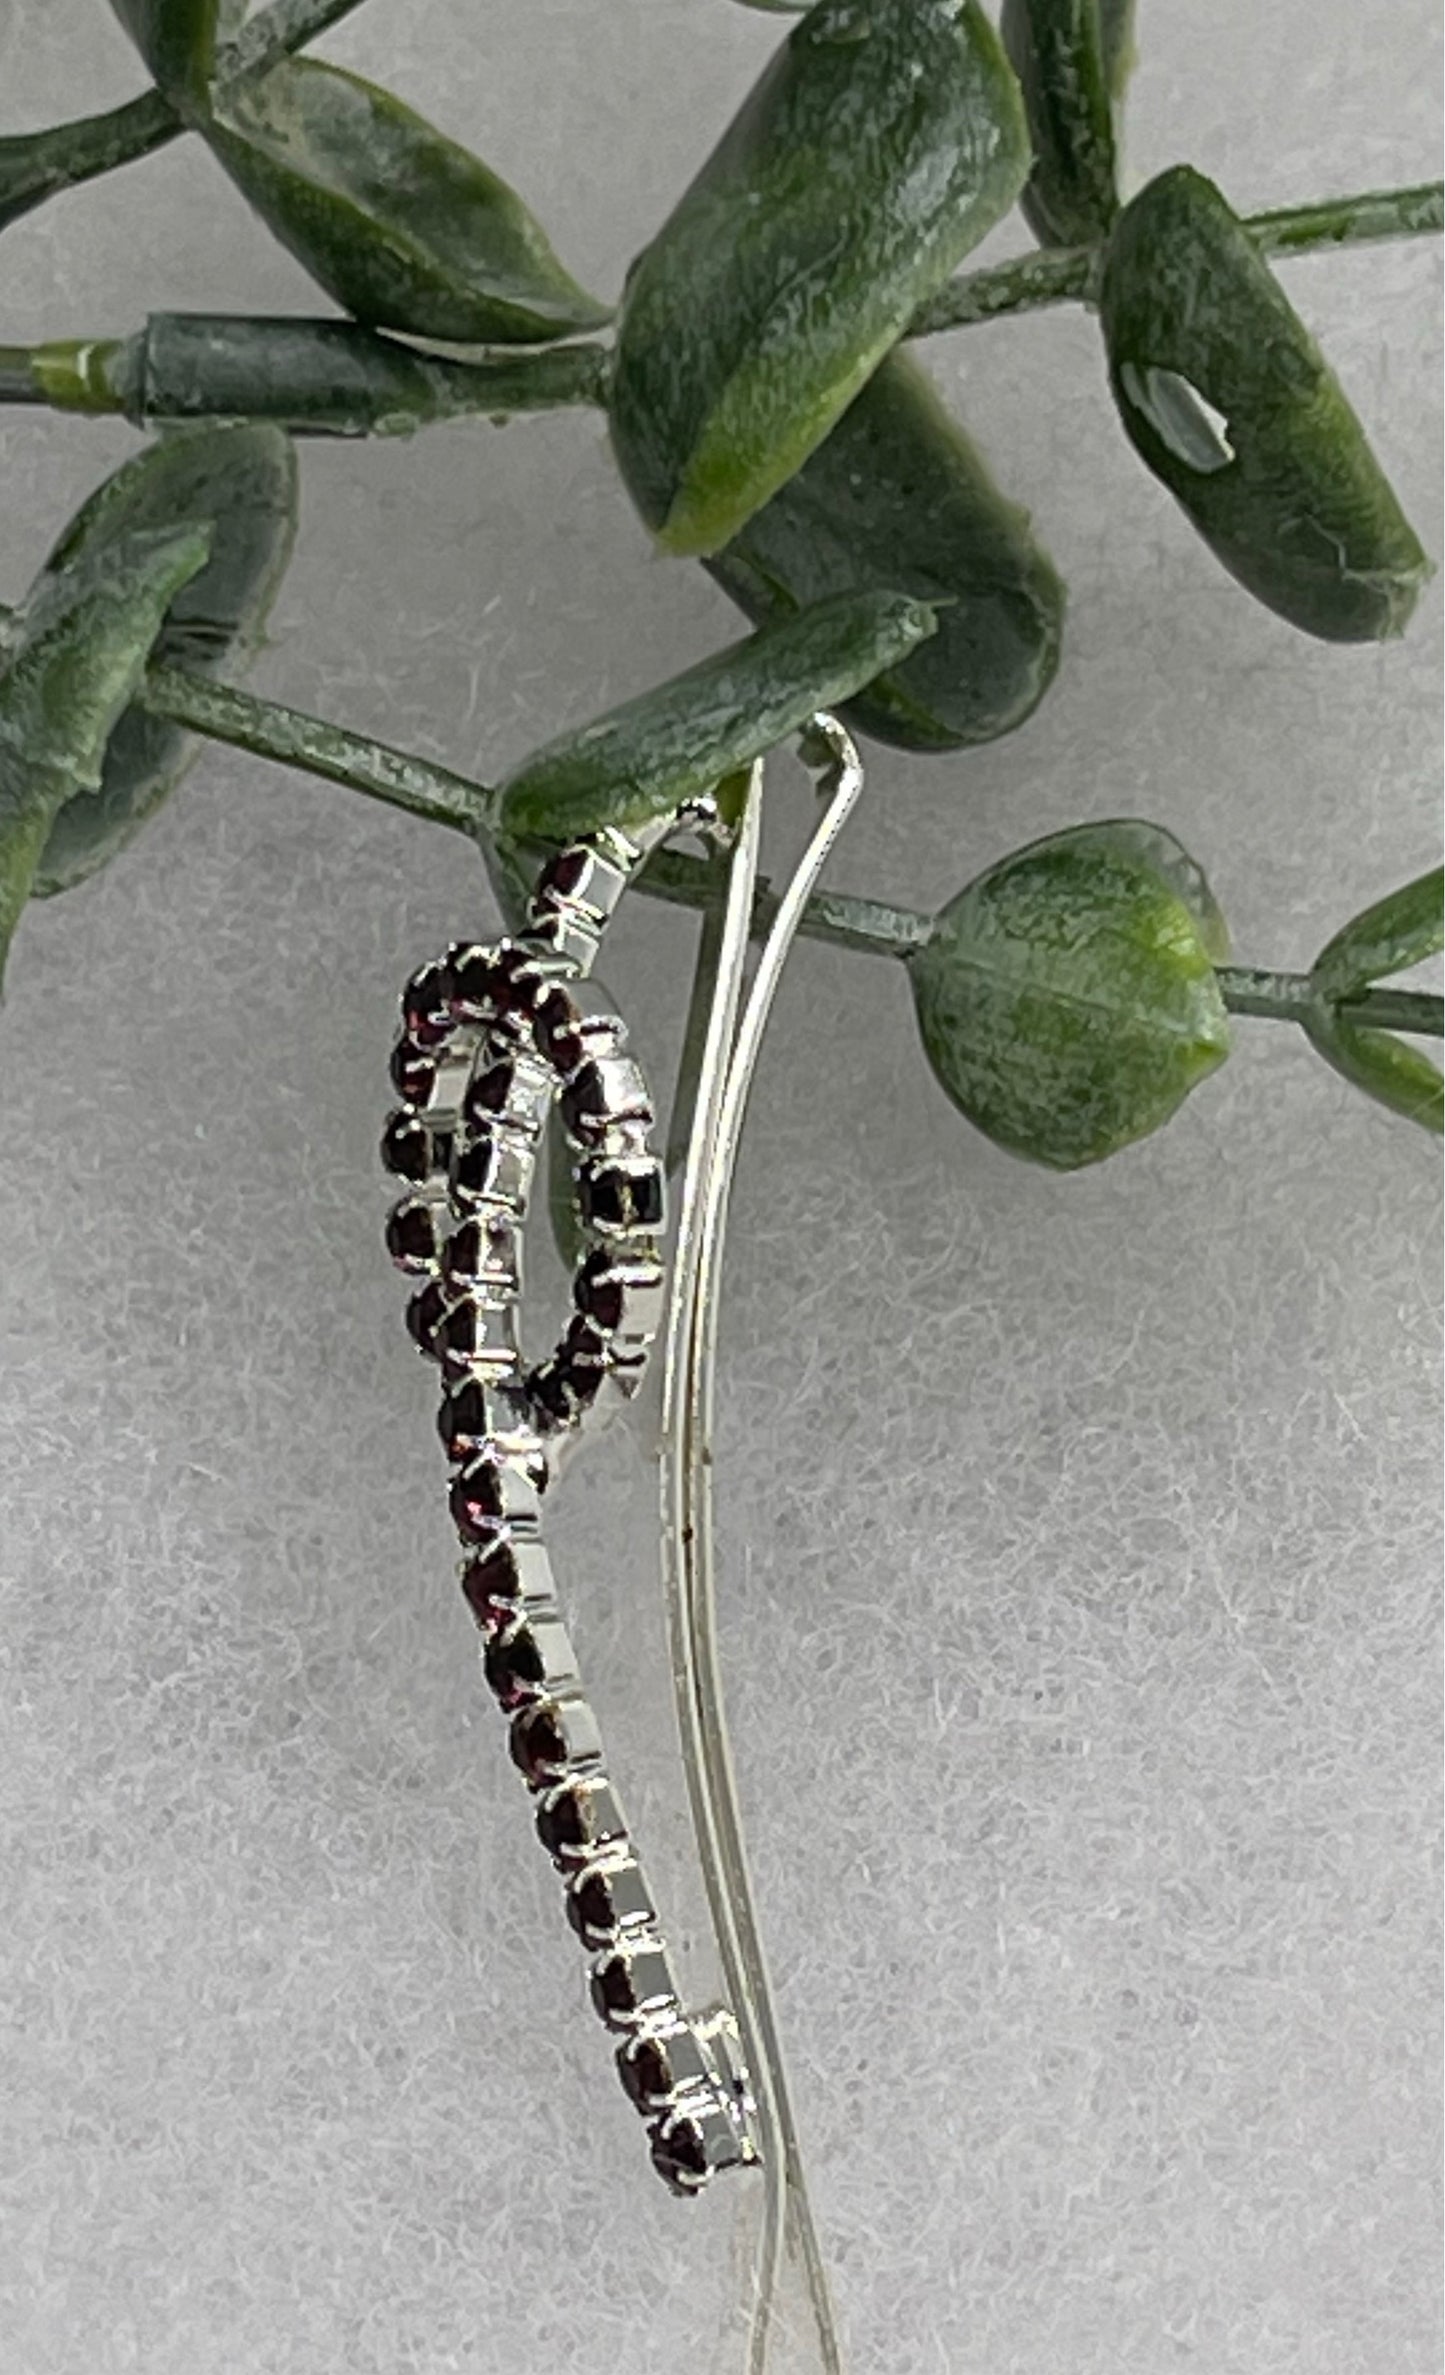 Black Crystal Rhinestone hair pin silver tone approx 2.5” bridesmaid wedding formal princess accessory accessories